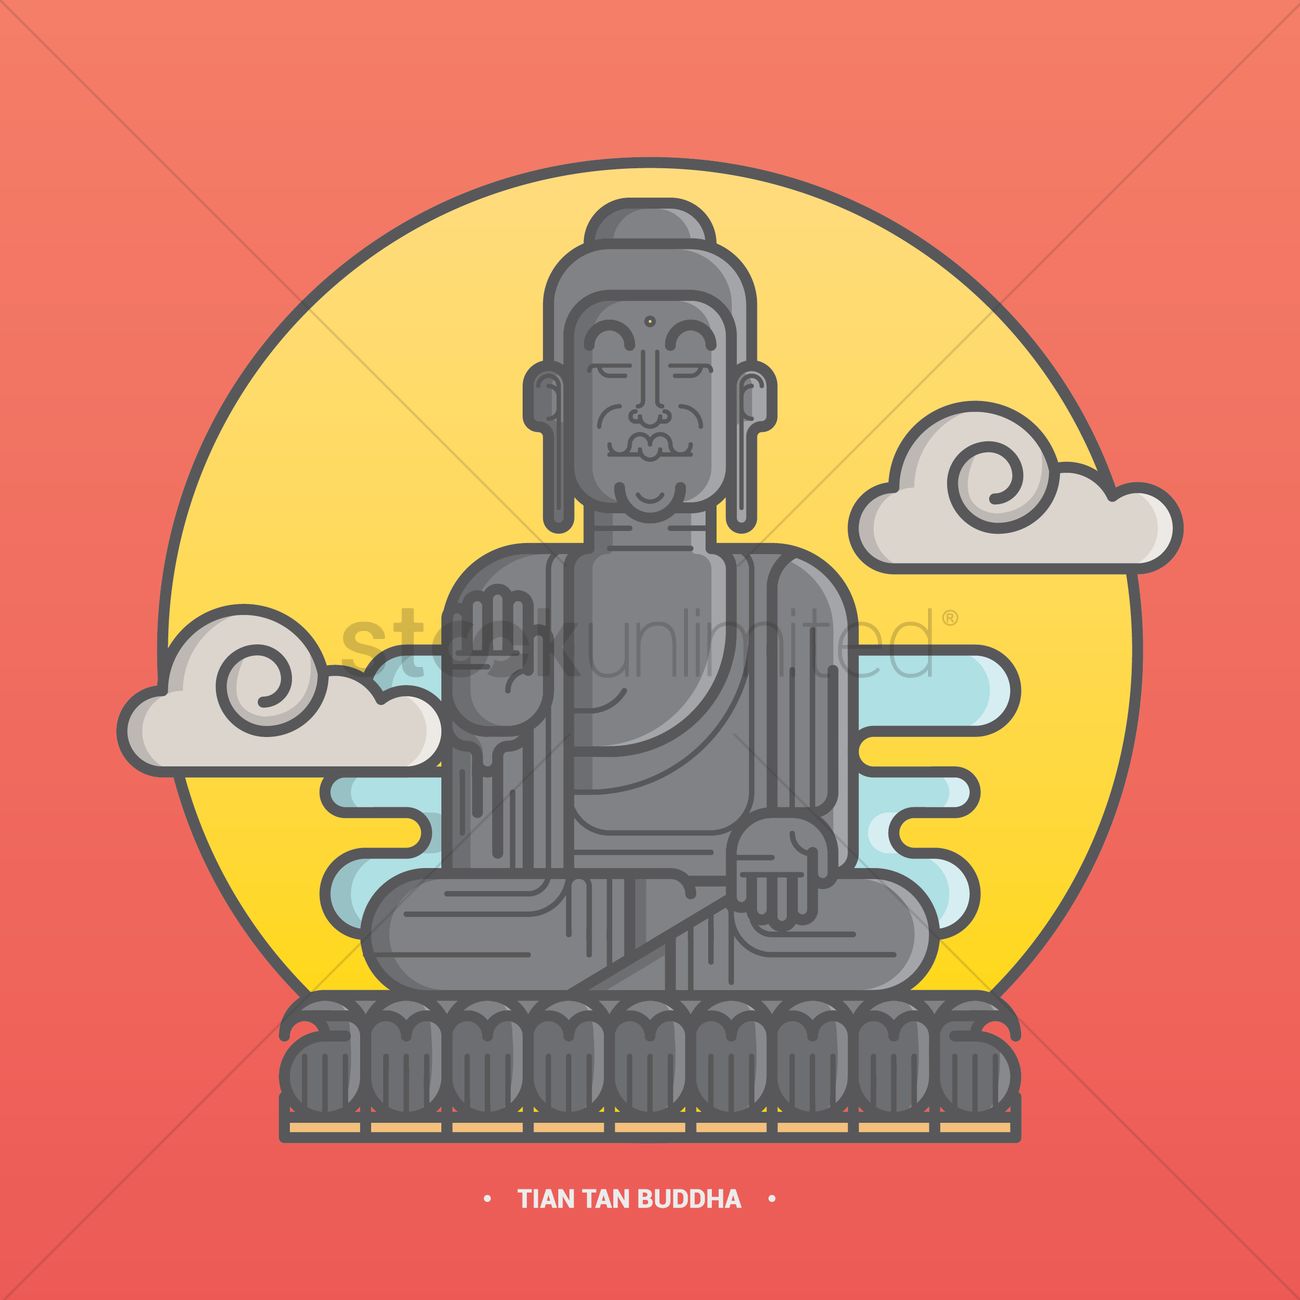 Tian tan buddha Vector Image.